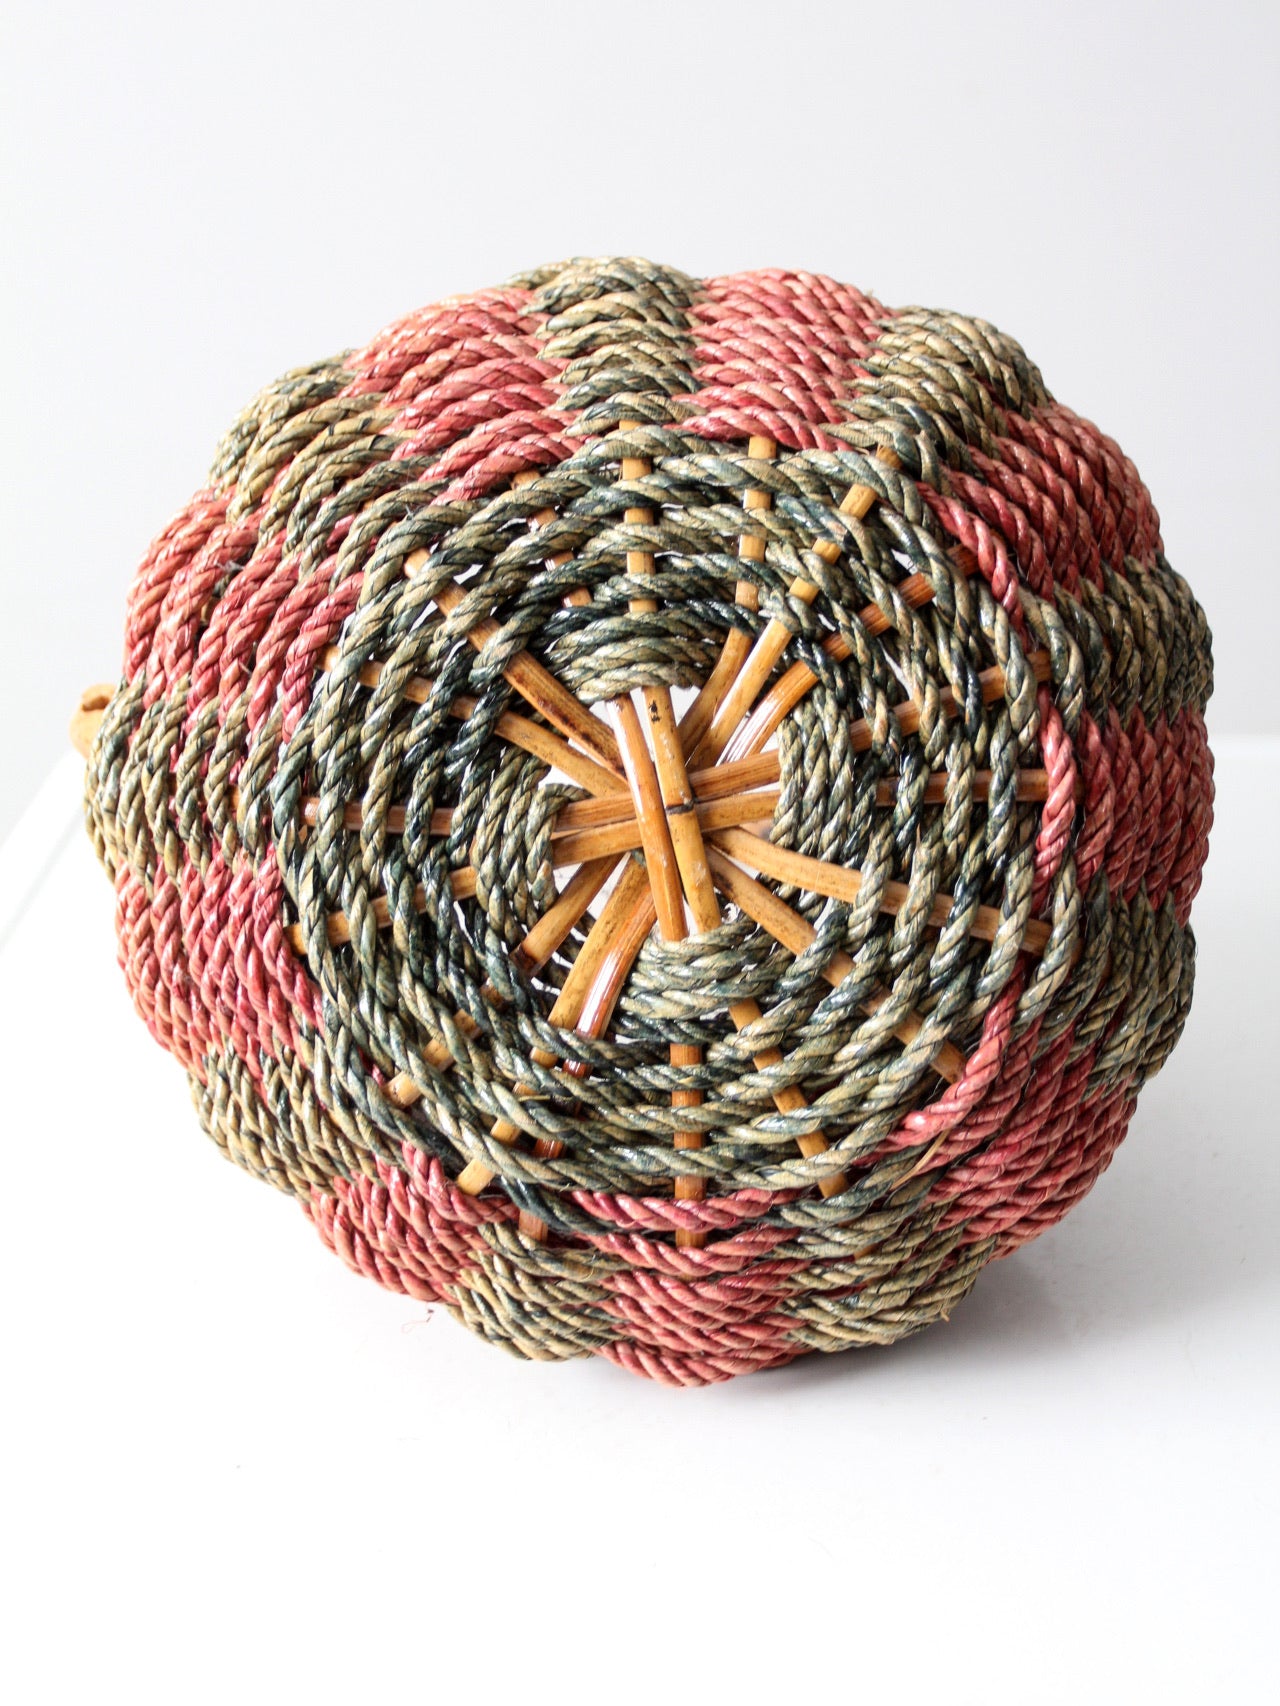 vintage rustic woven handle basket